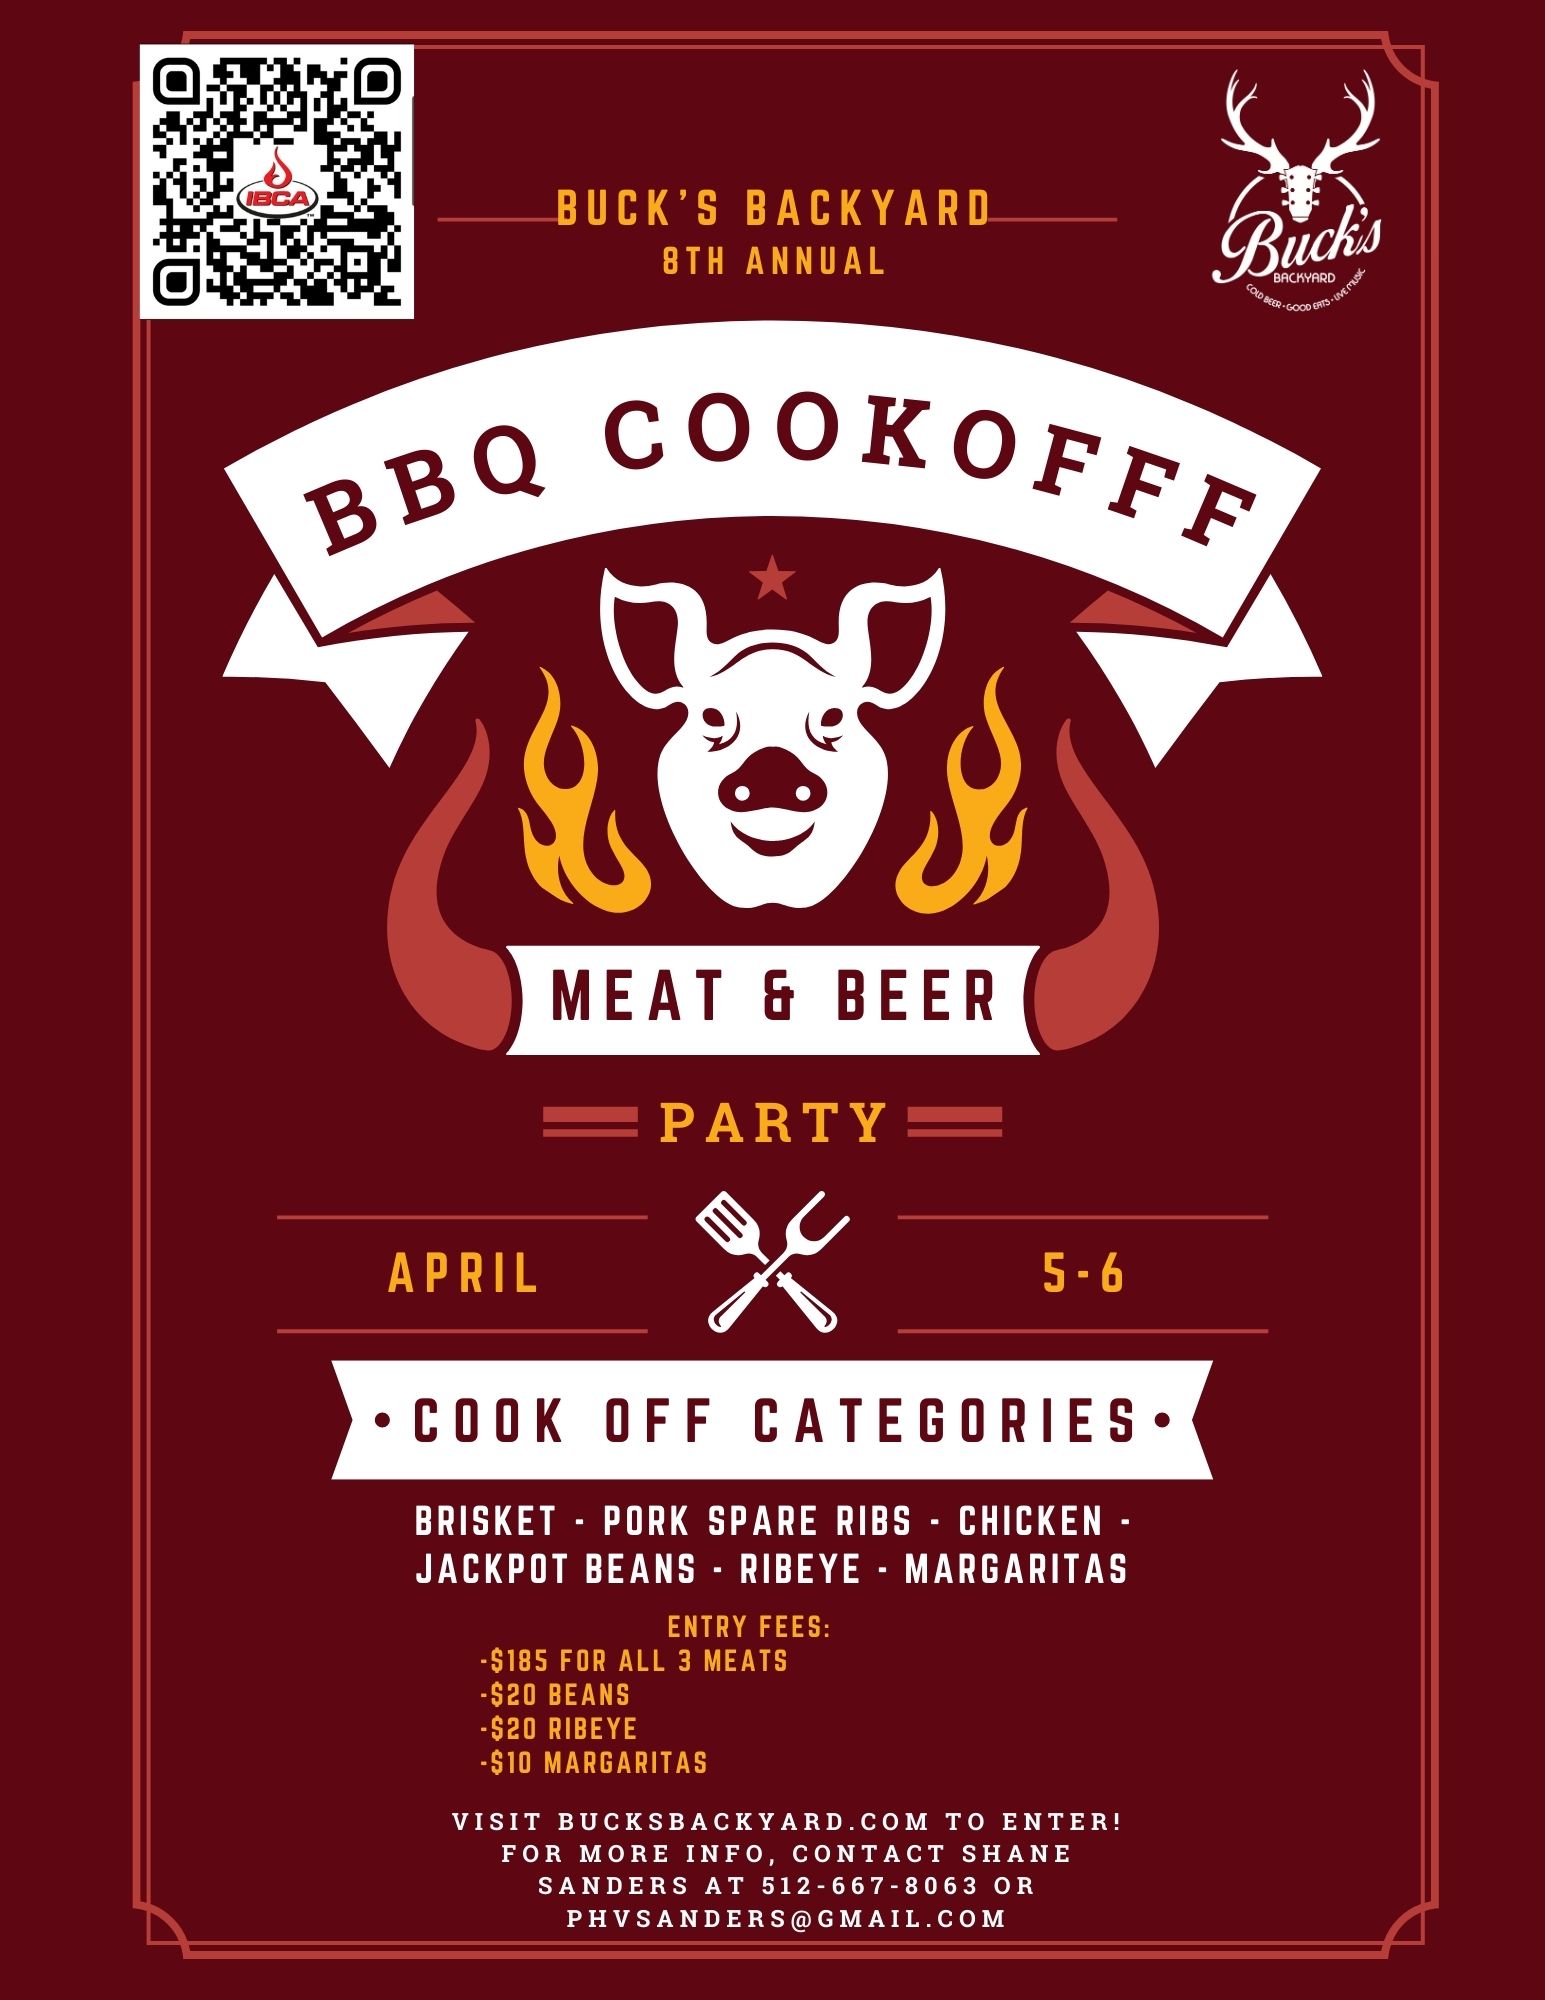 8th Annual BBQ Cookoff - Buck's Backyard